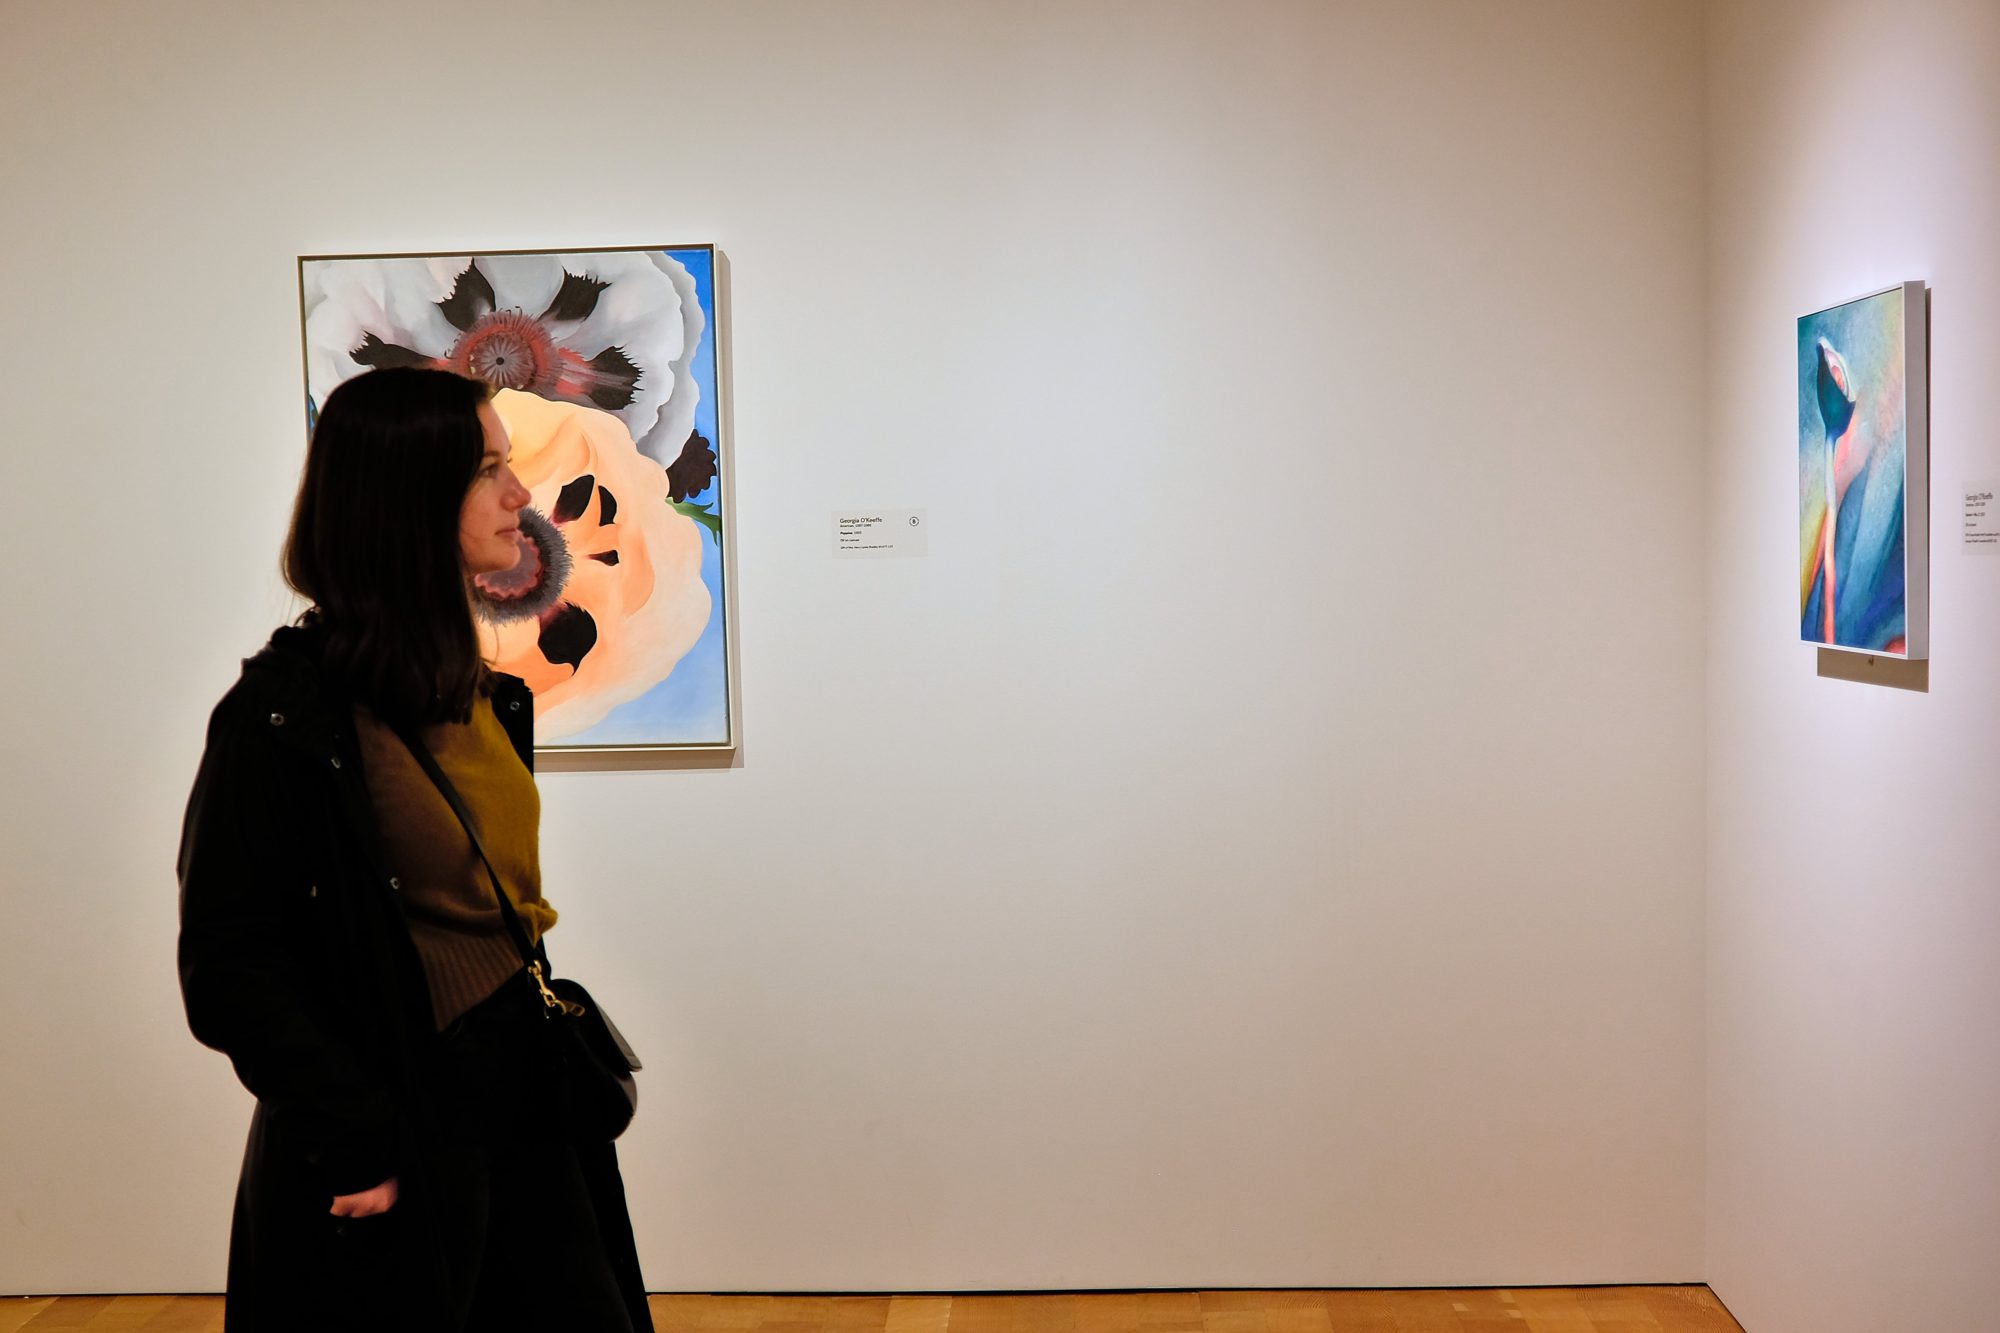 Alyssa studies a painting at the Milwaukee Art Museum